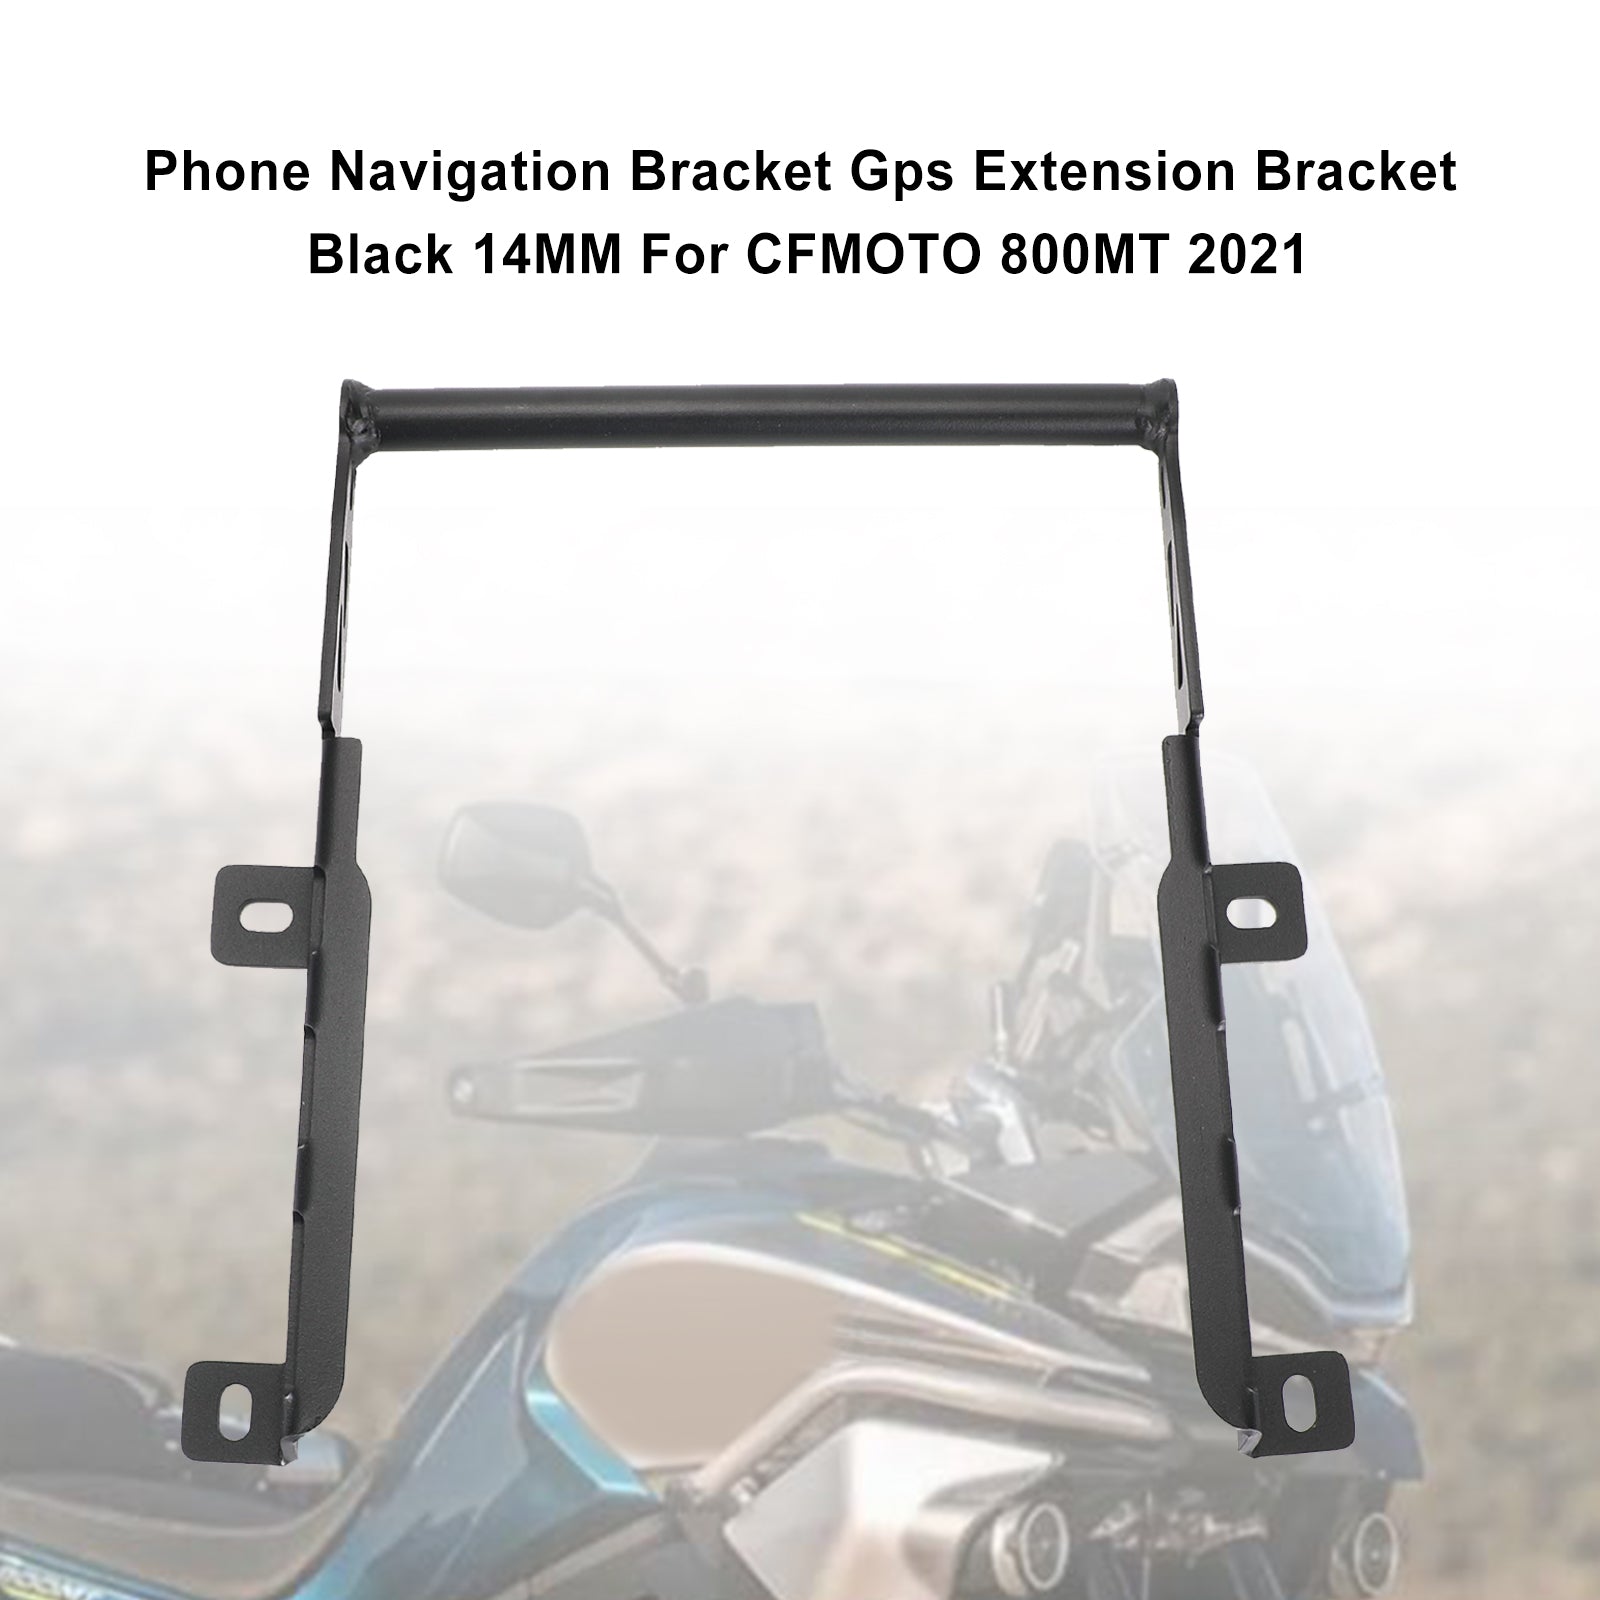 Gps Extension Bracket Phone Navi Bracket Black 14Mm Fits For Cfmoto 800Mt 2021 Generic